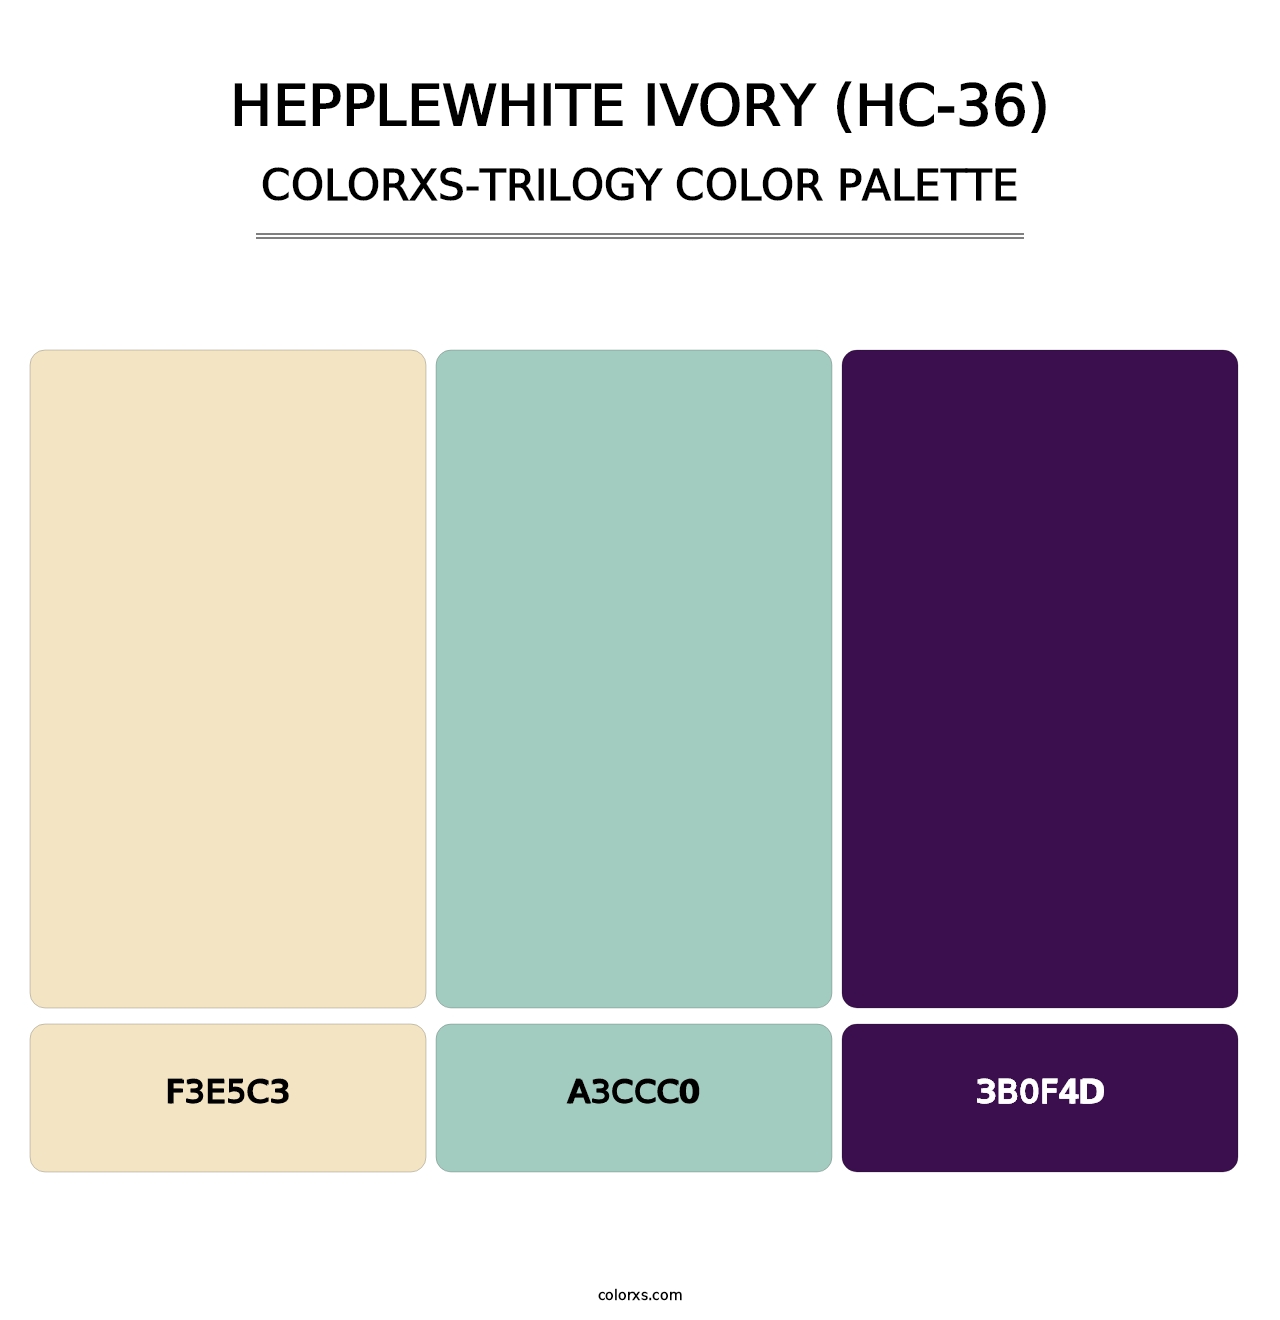 Hepplewhite Ivory (HC-36) - Colorxs Trilogy Palette